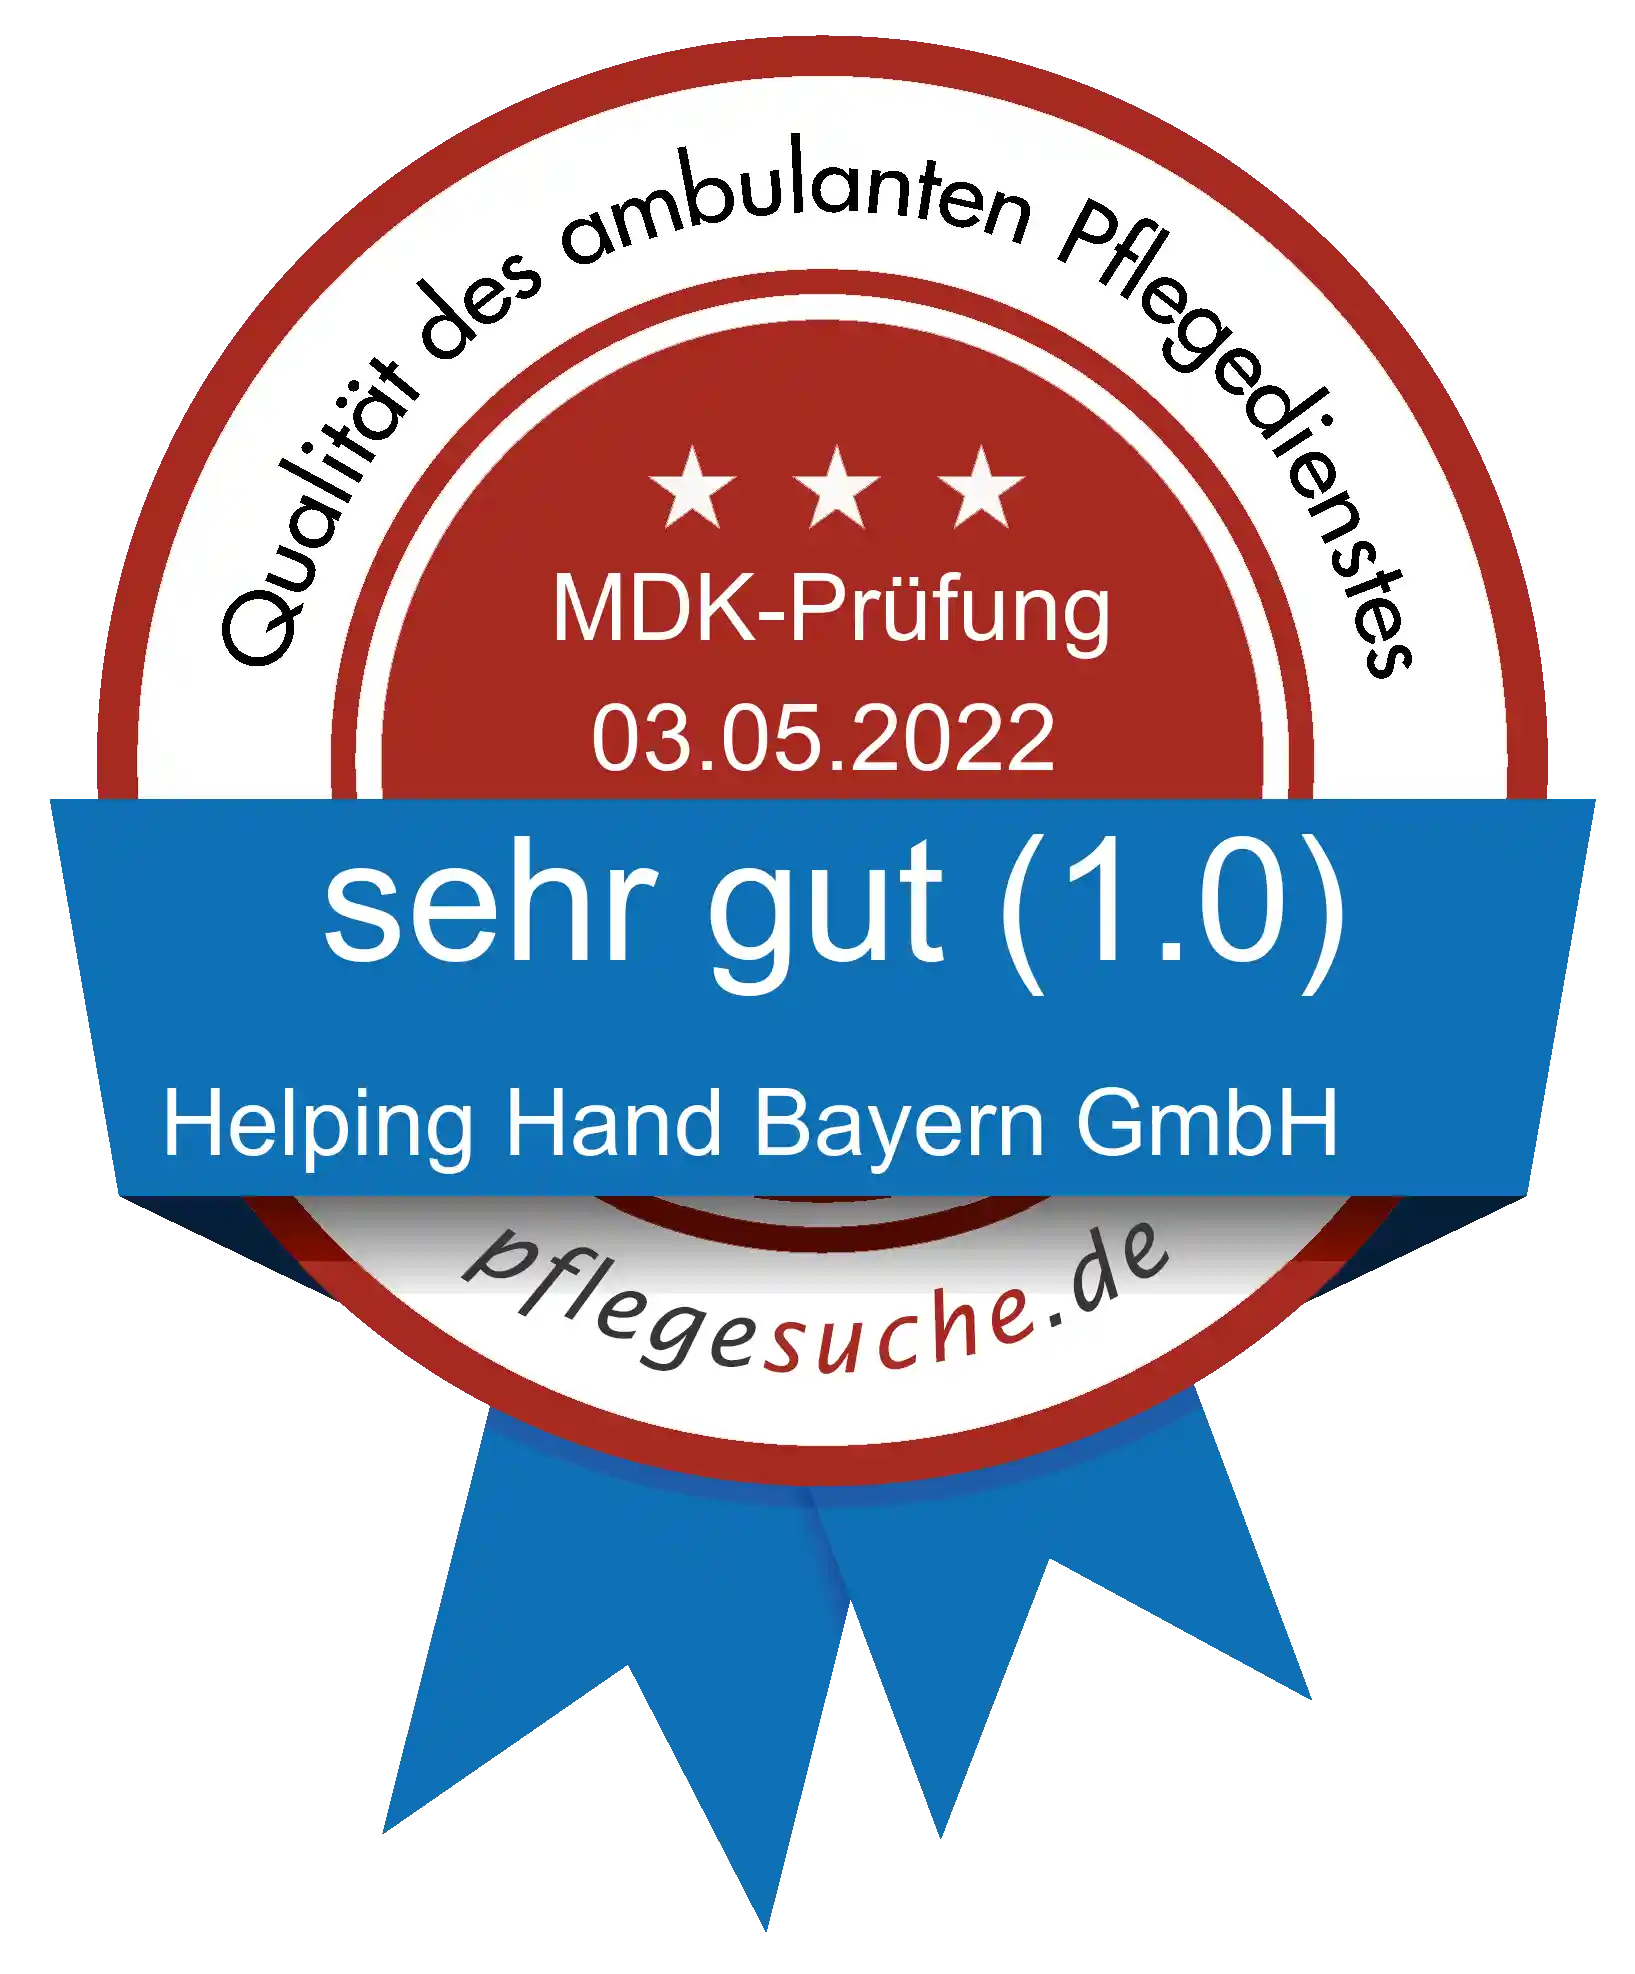 Siegel Benotung: Helping Hand Bayern GmbH